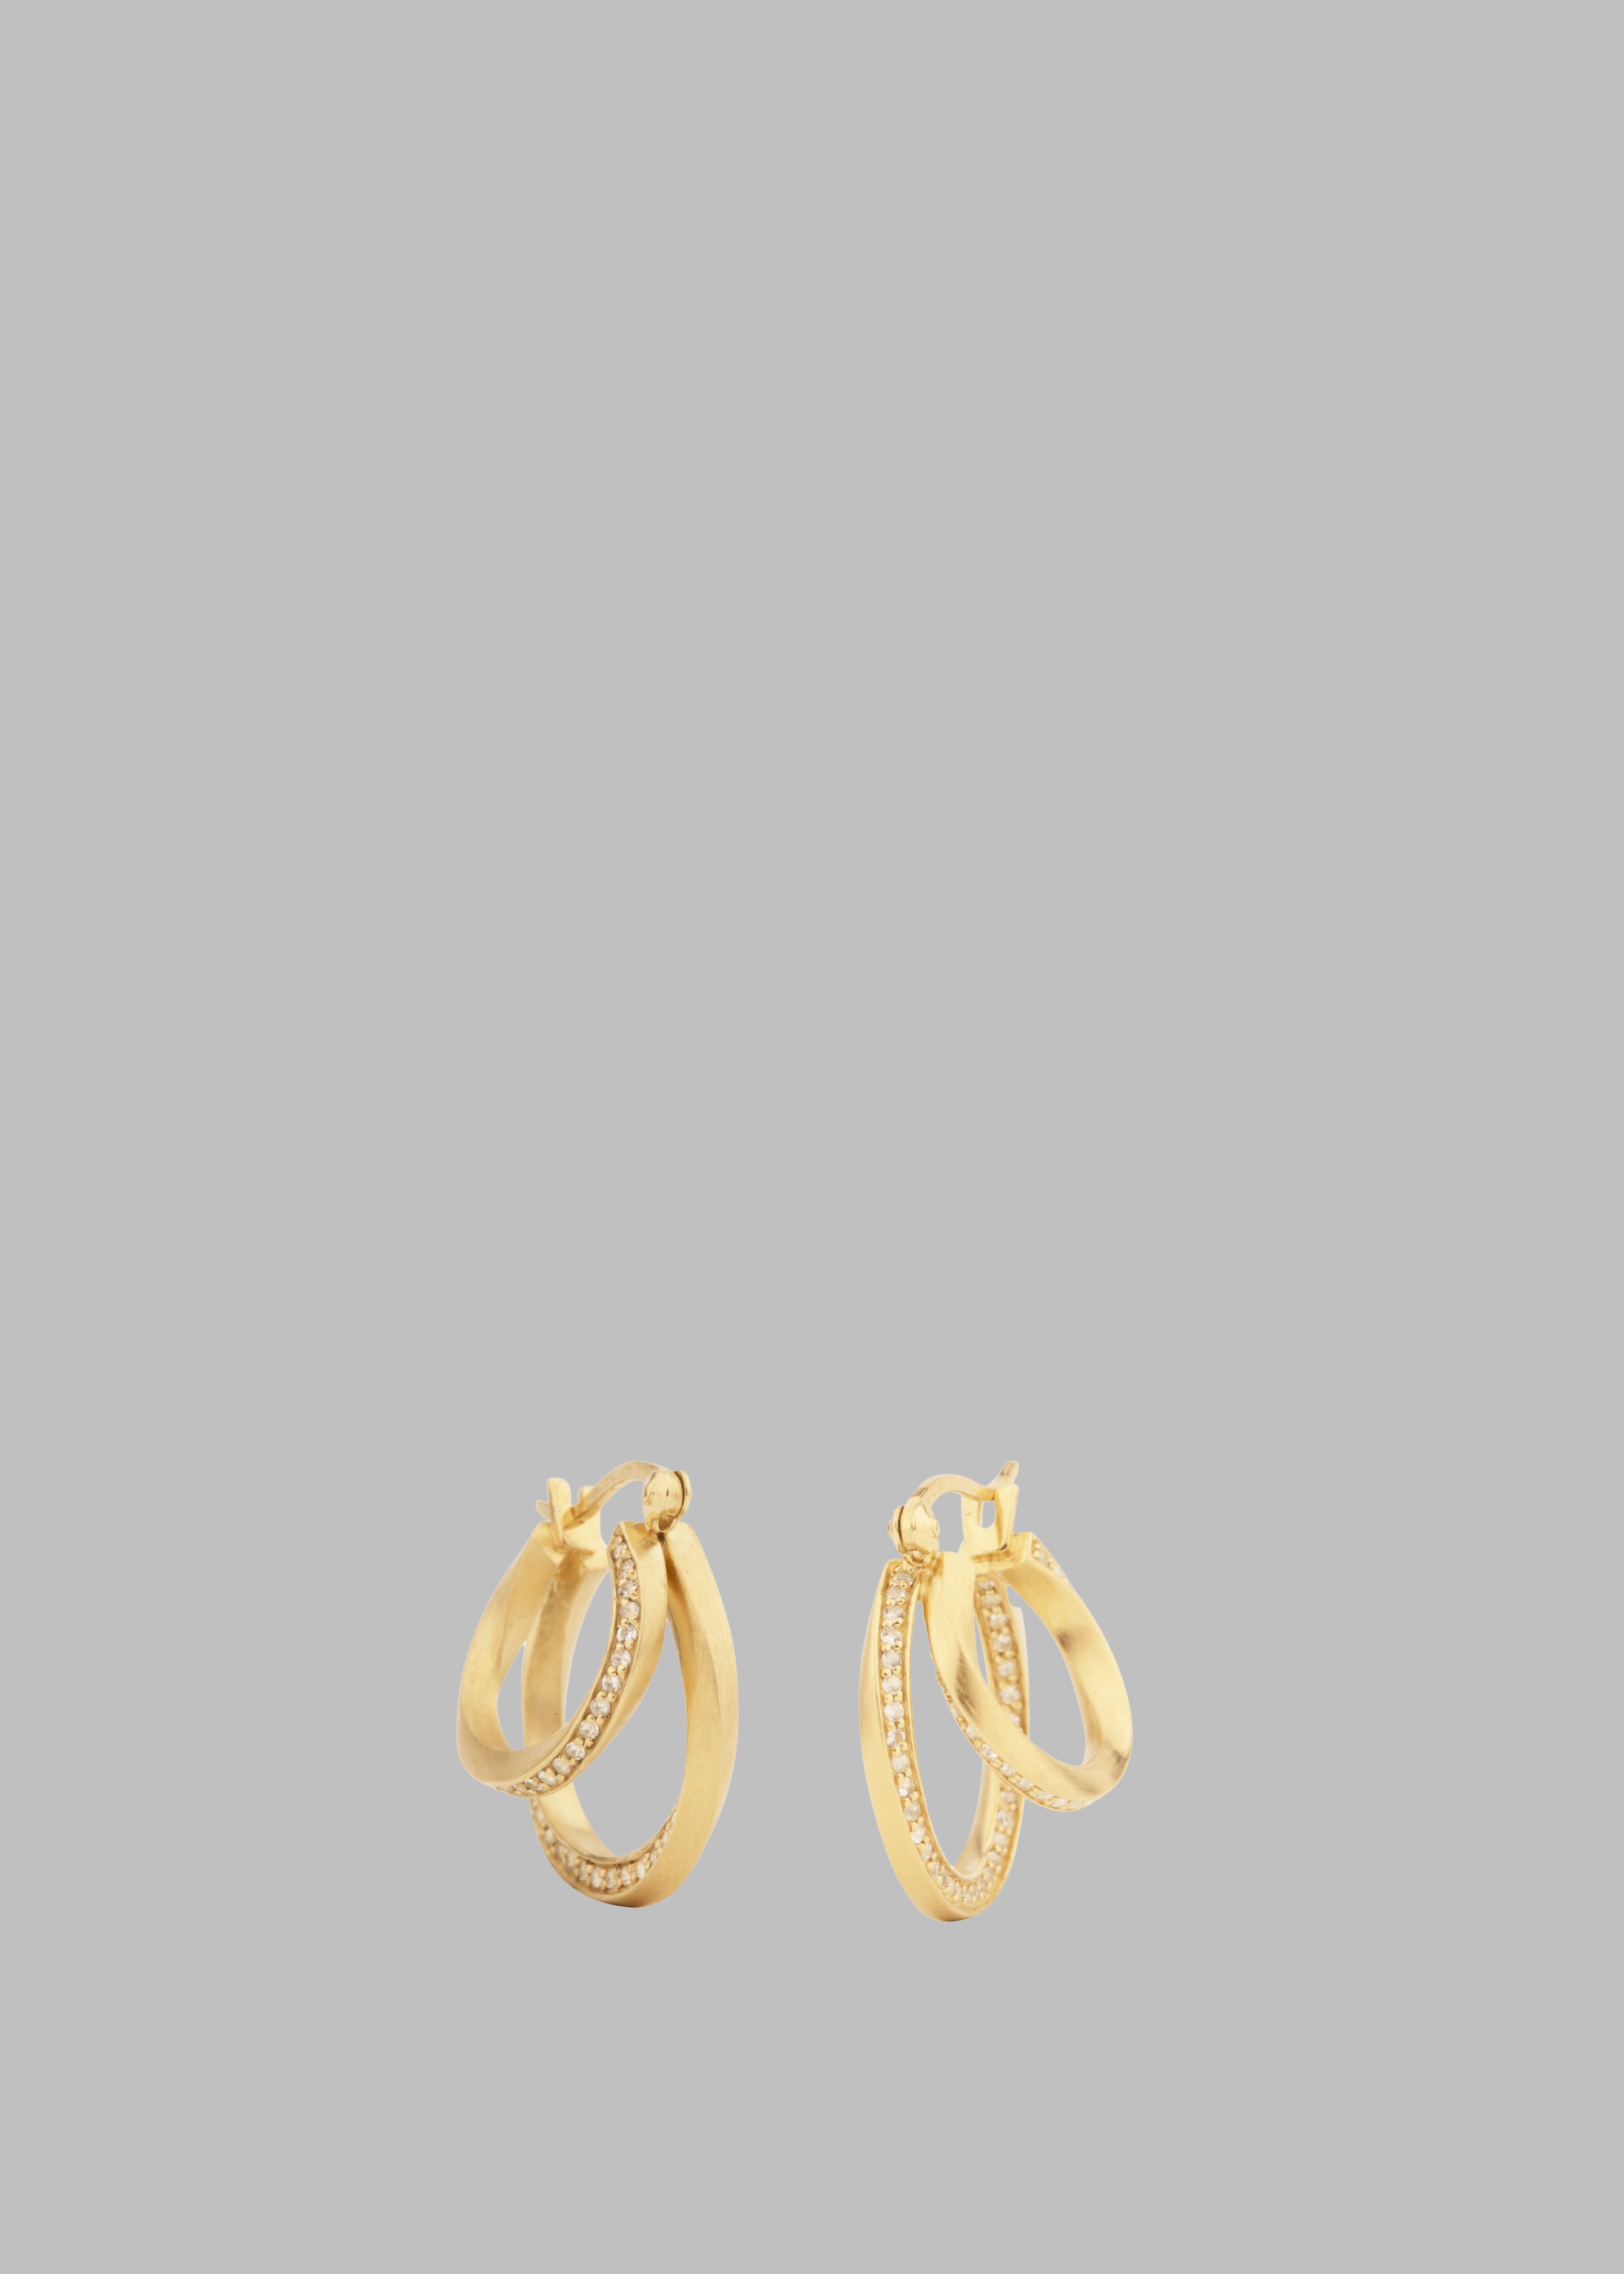 Completedworks Suburbs Earrings - Gold Vermeil - 2